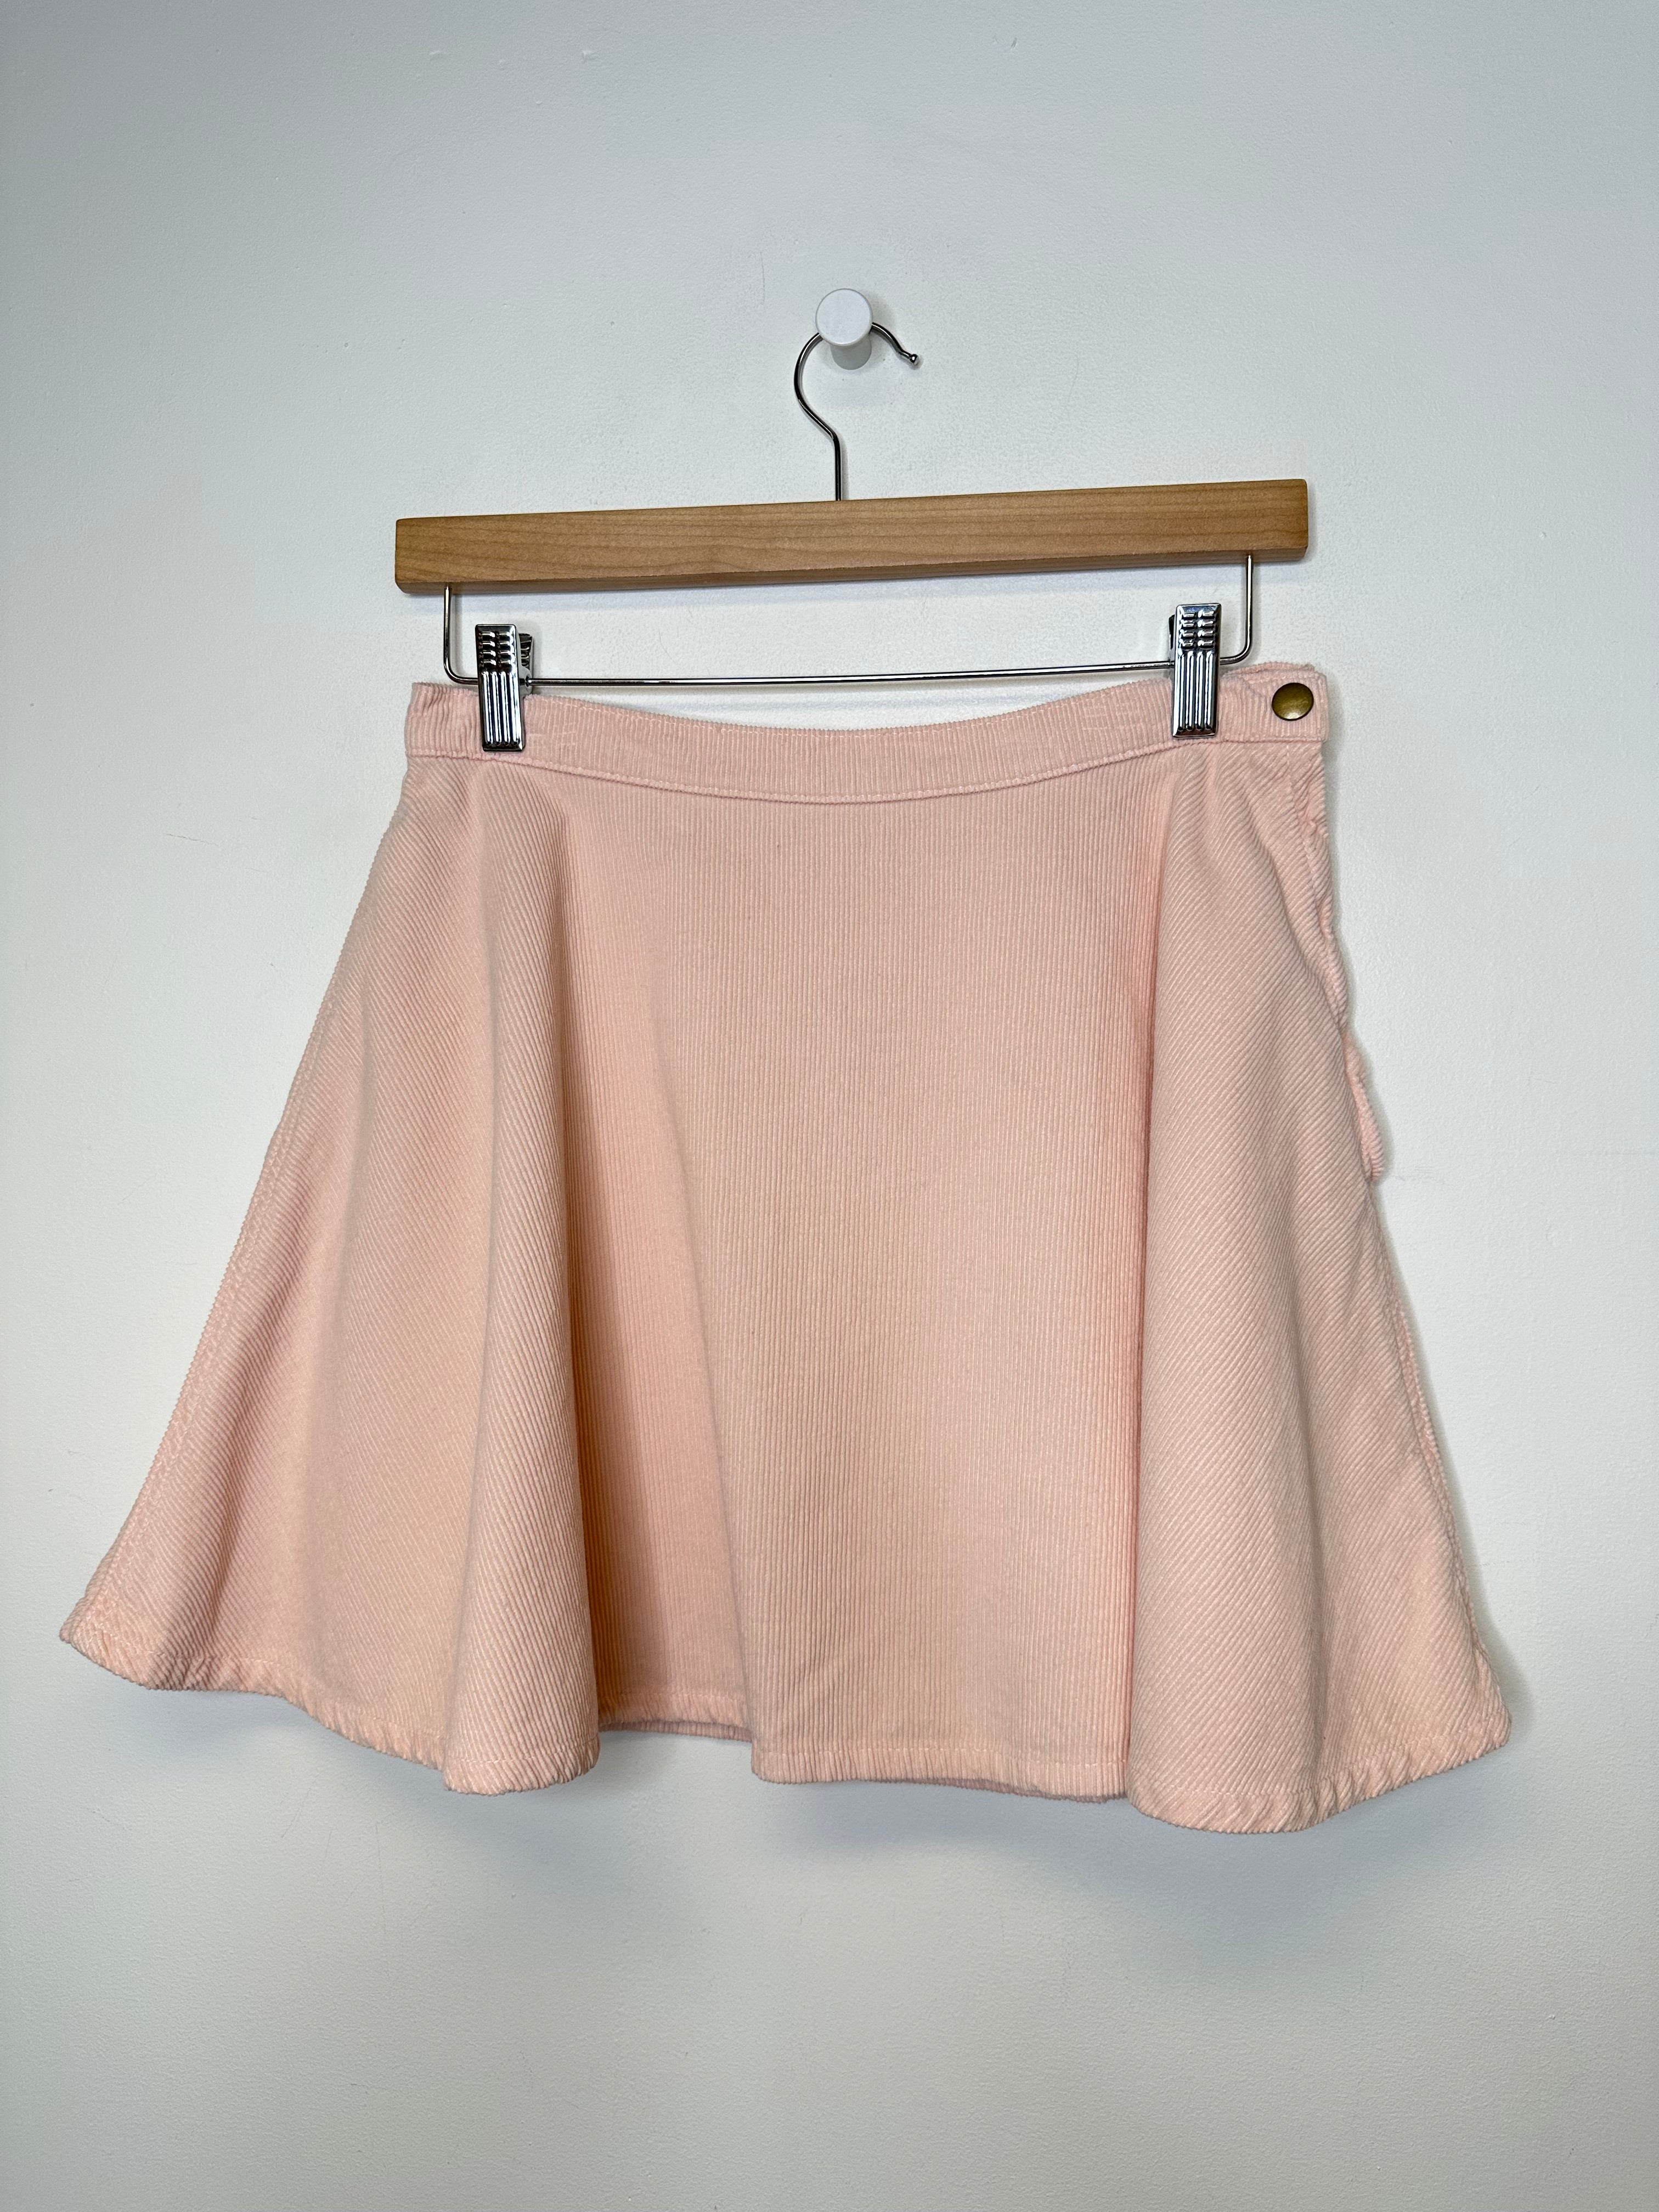 American Apparel Pink Corduroy Mini Skirt - L